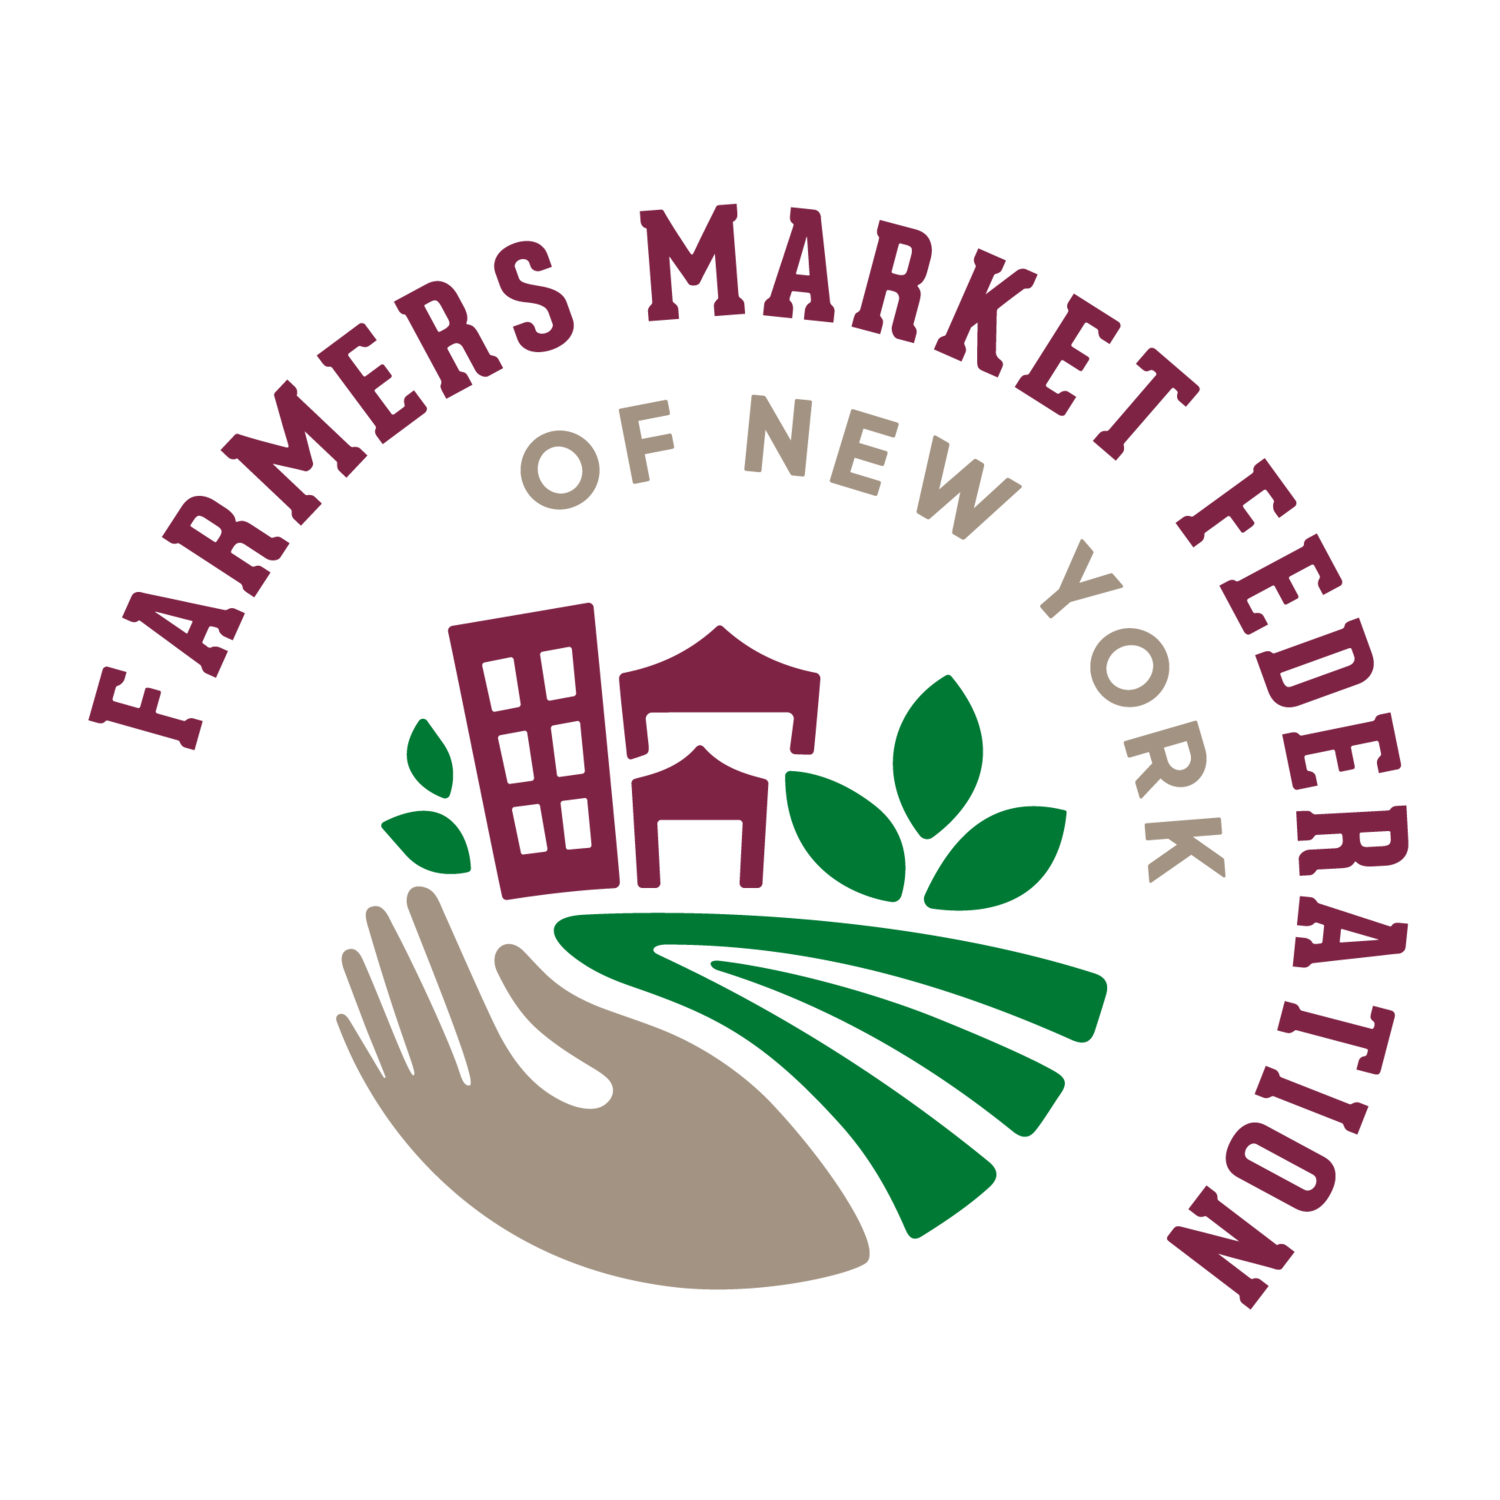 Farmers Market Federation of New York logo